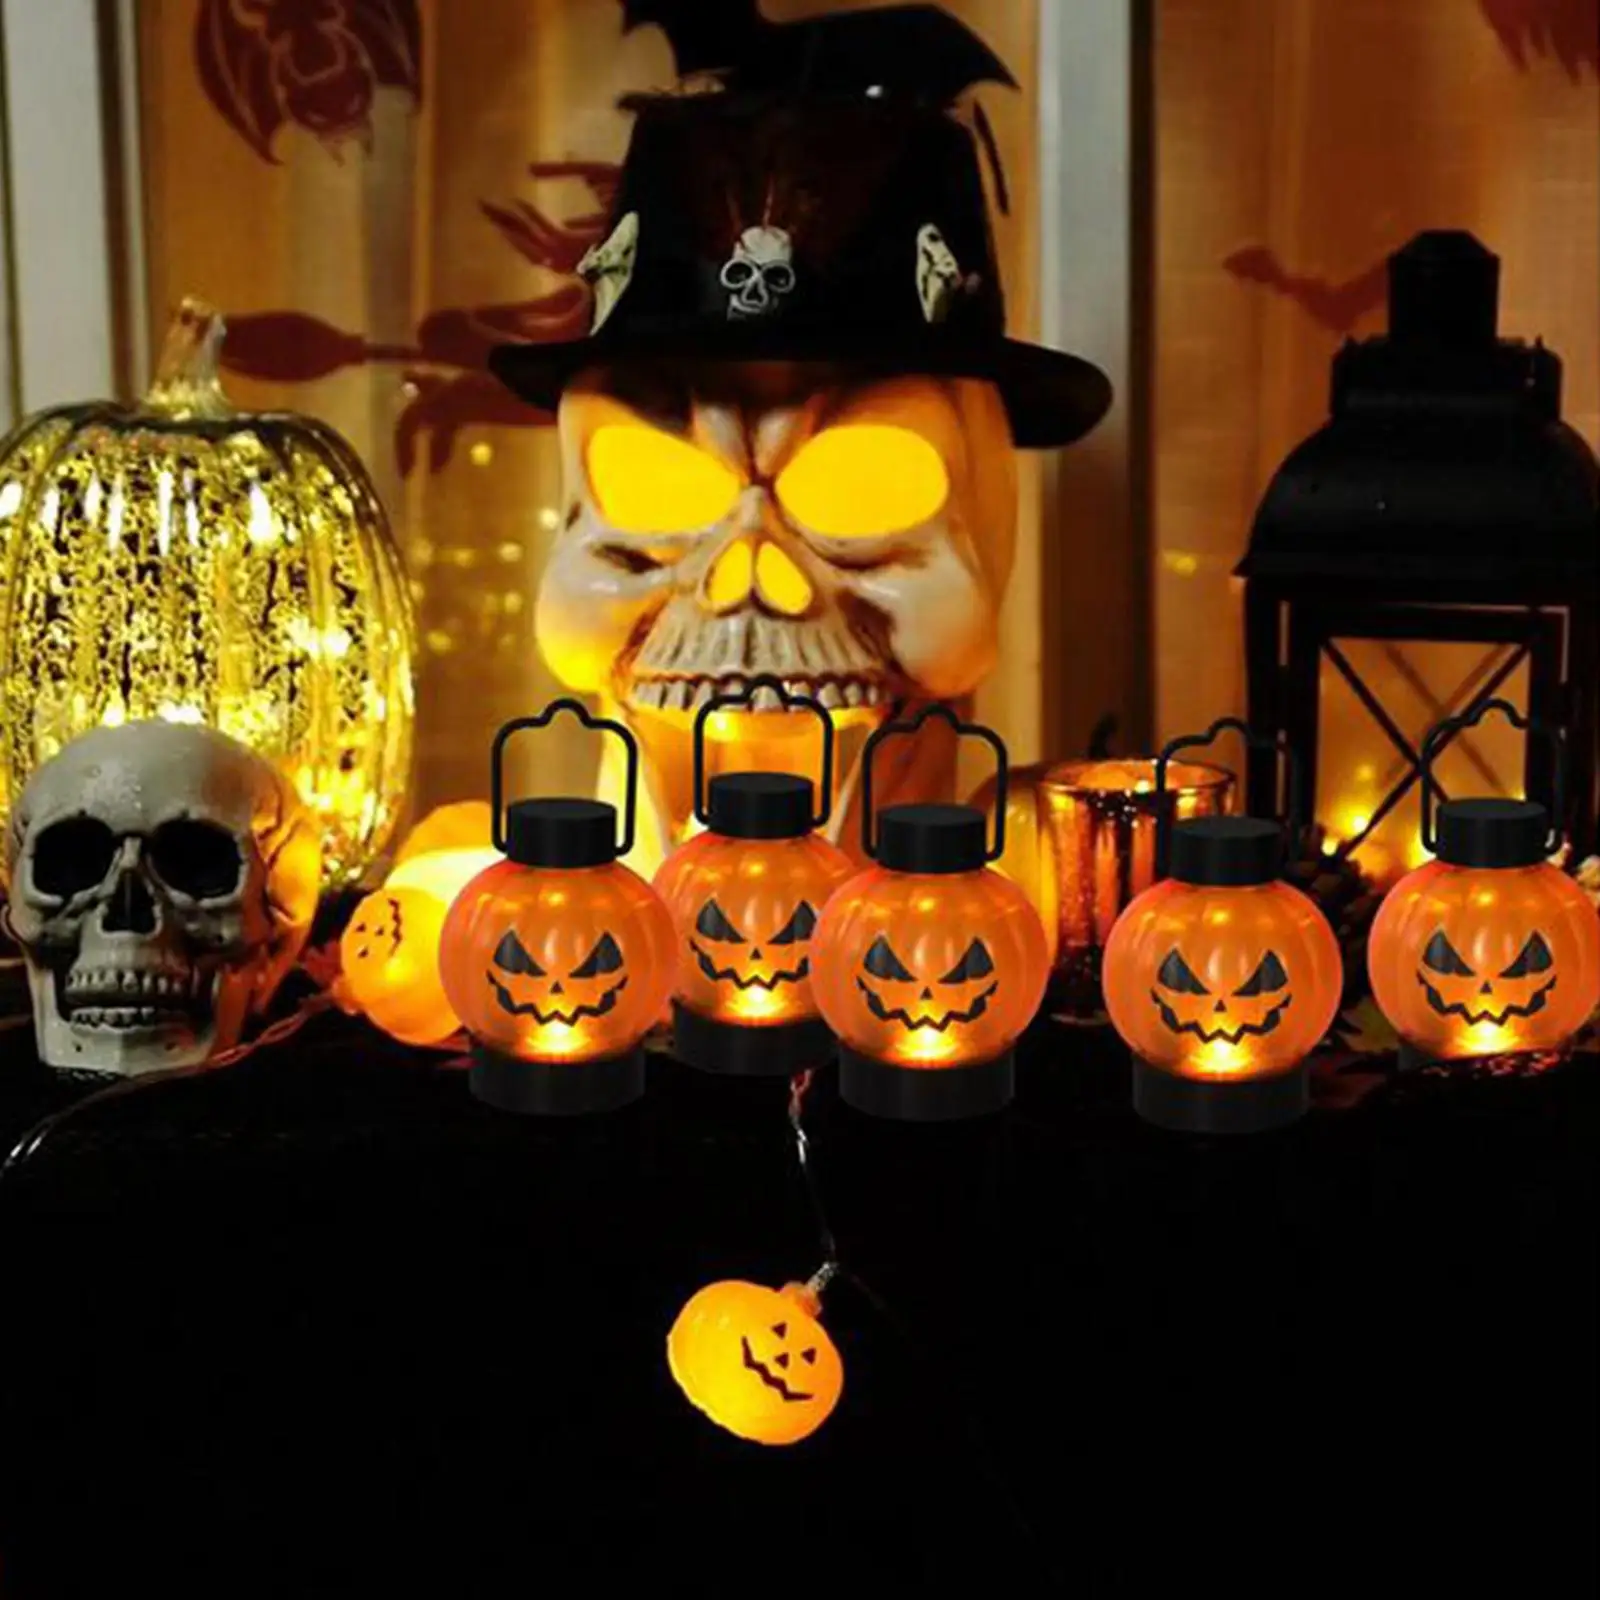 6x Halloween Pumpkin Lights Lamp Candle Lanterns for Party Harvest Halloween No Pattern